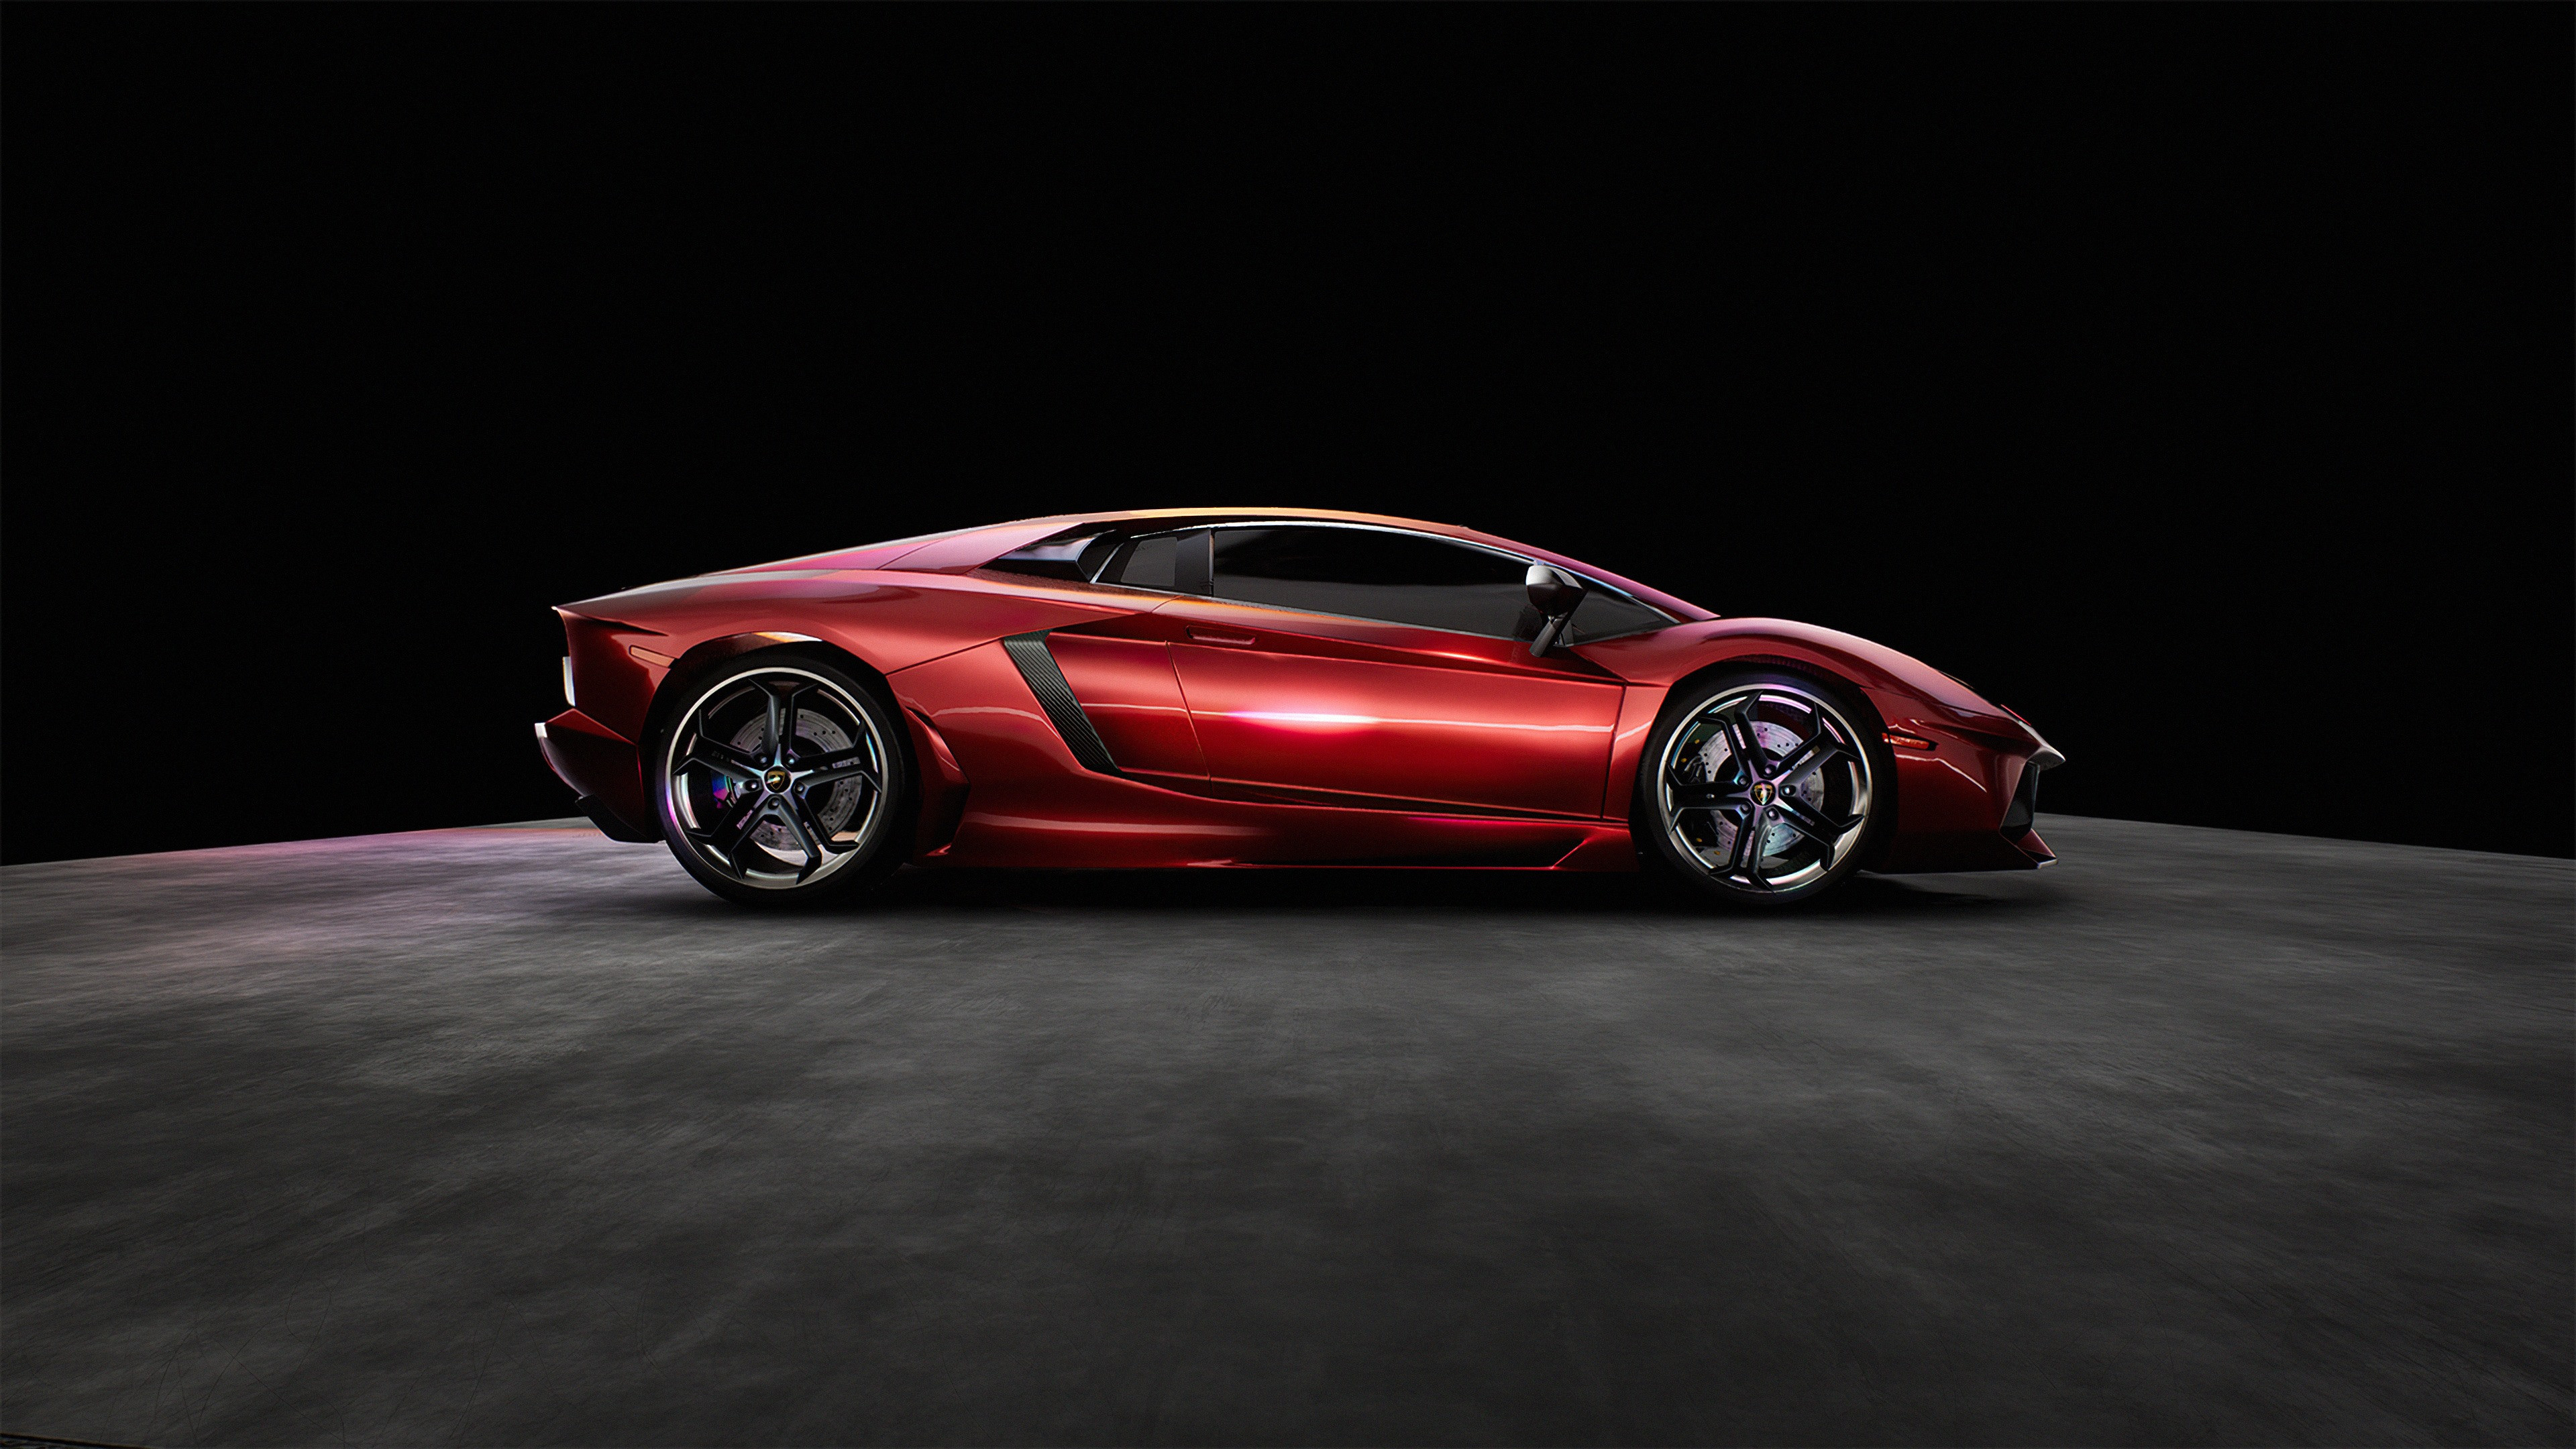 Lamborghini Aventador, Side view marvel, Red supercars in motion, Black background, 3840x2160 4K Desktop